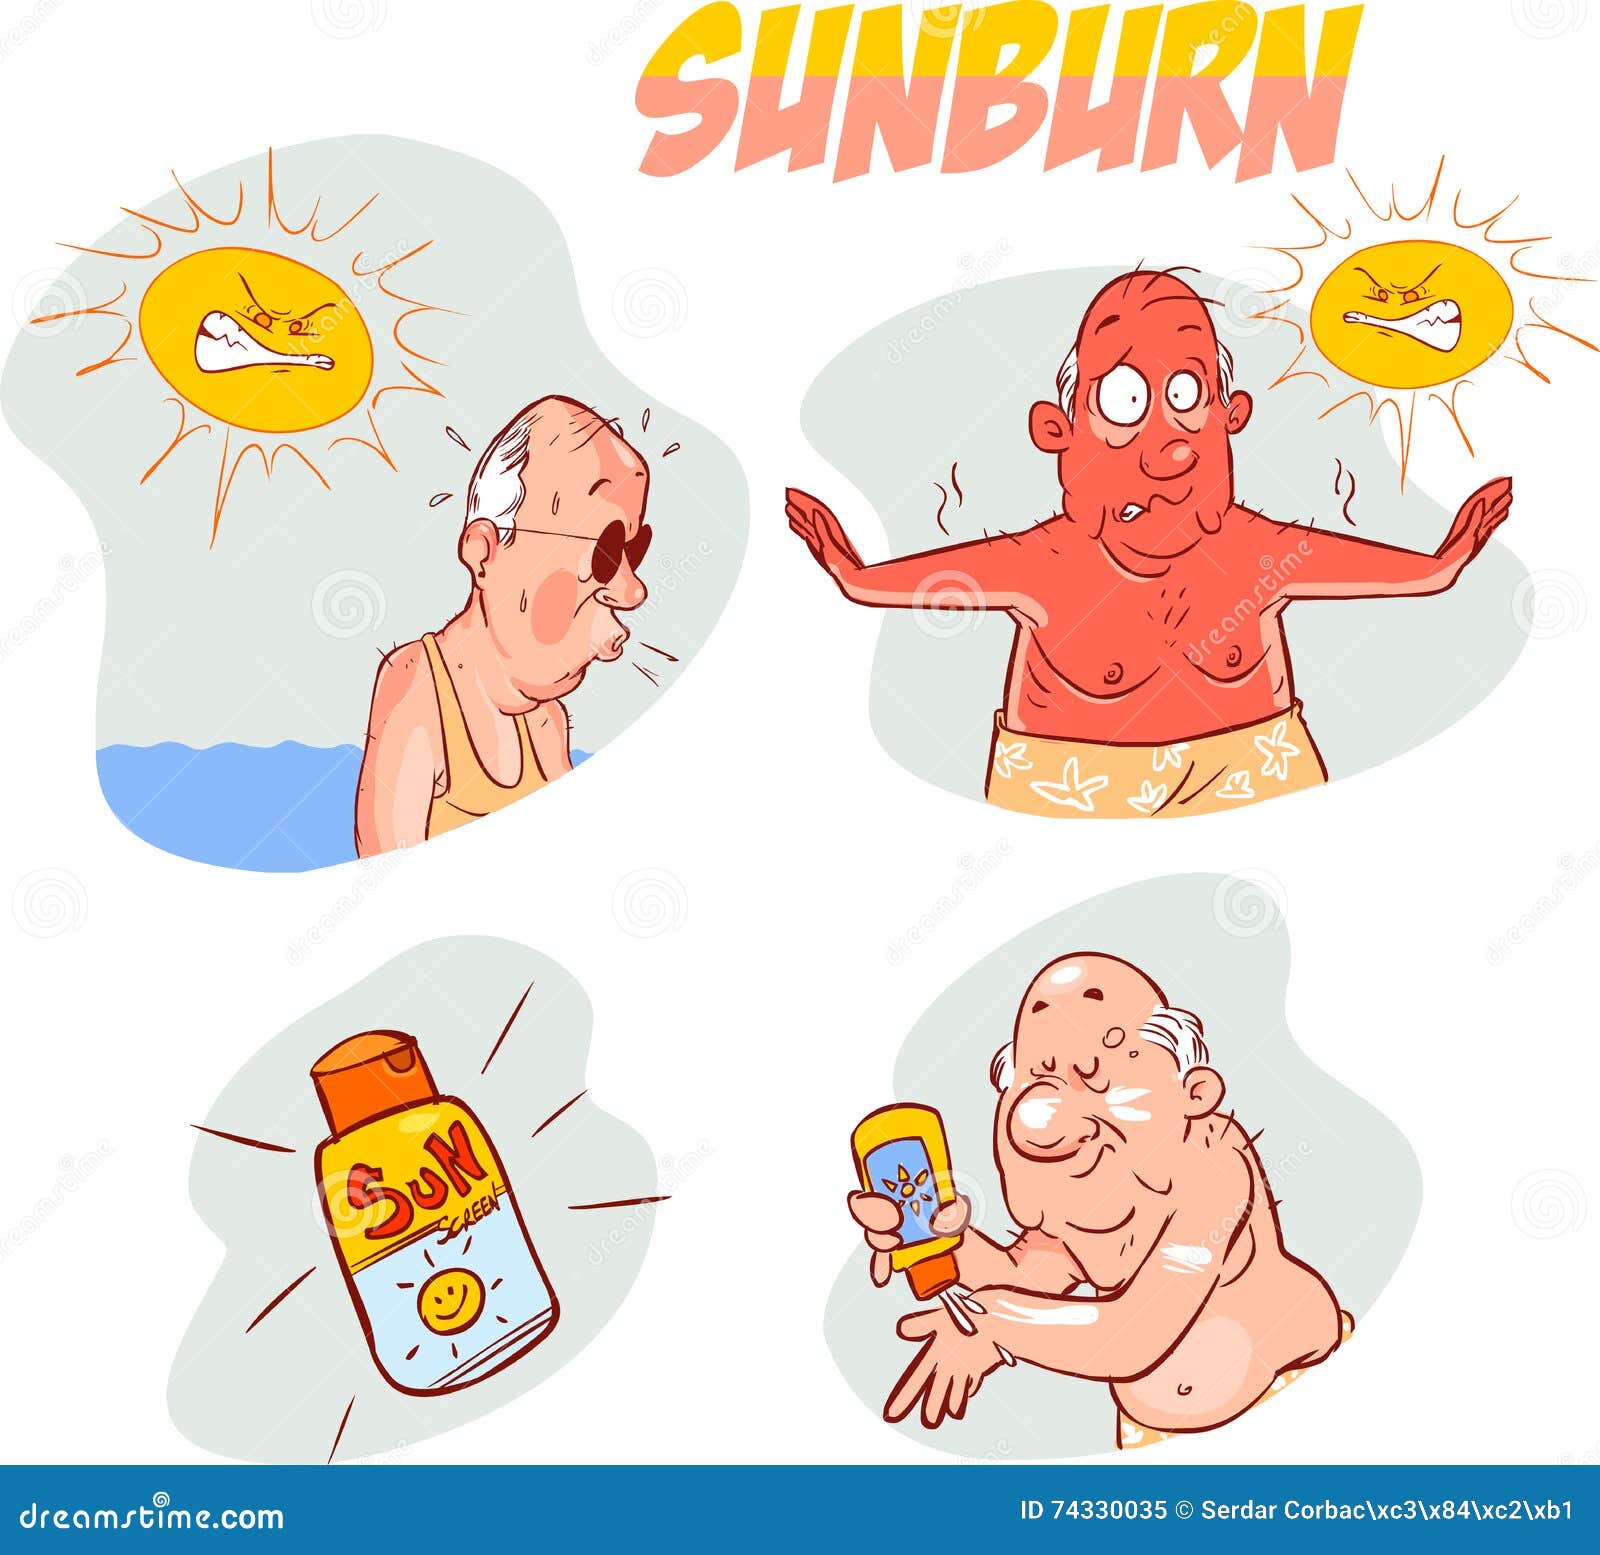 man with a very bad sunburn